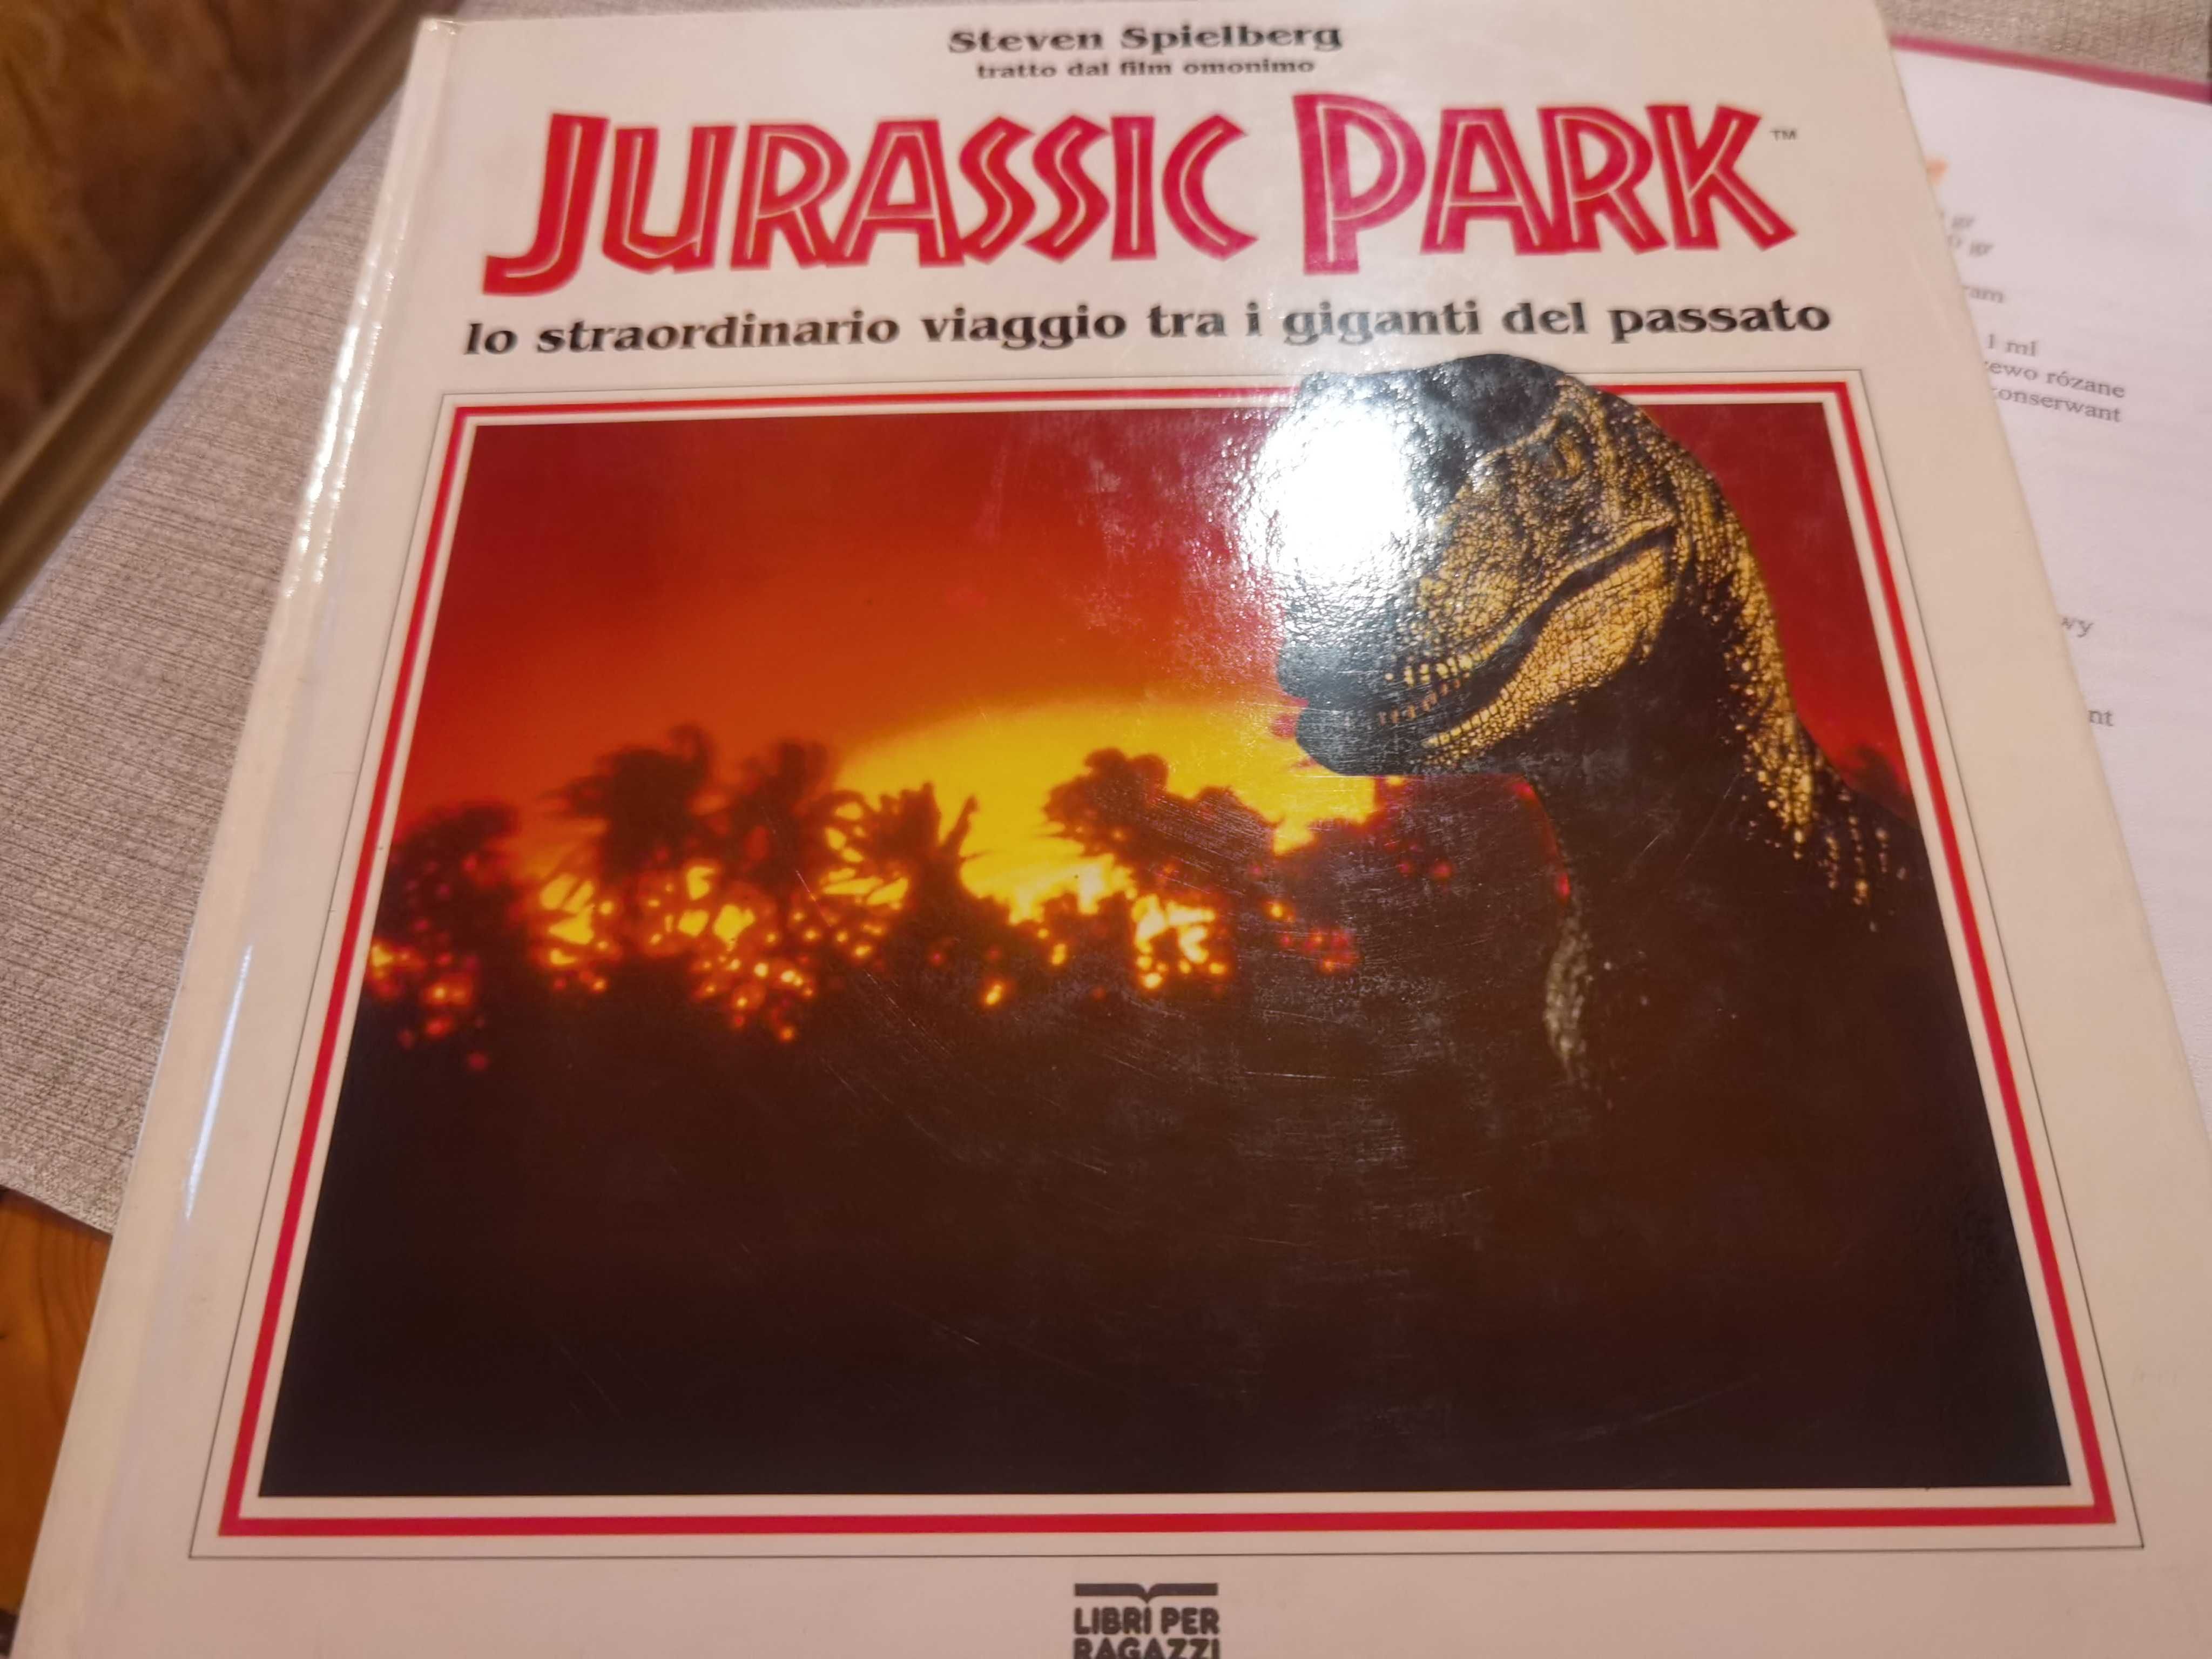 Jurassic Park po wlosku